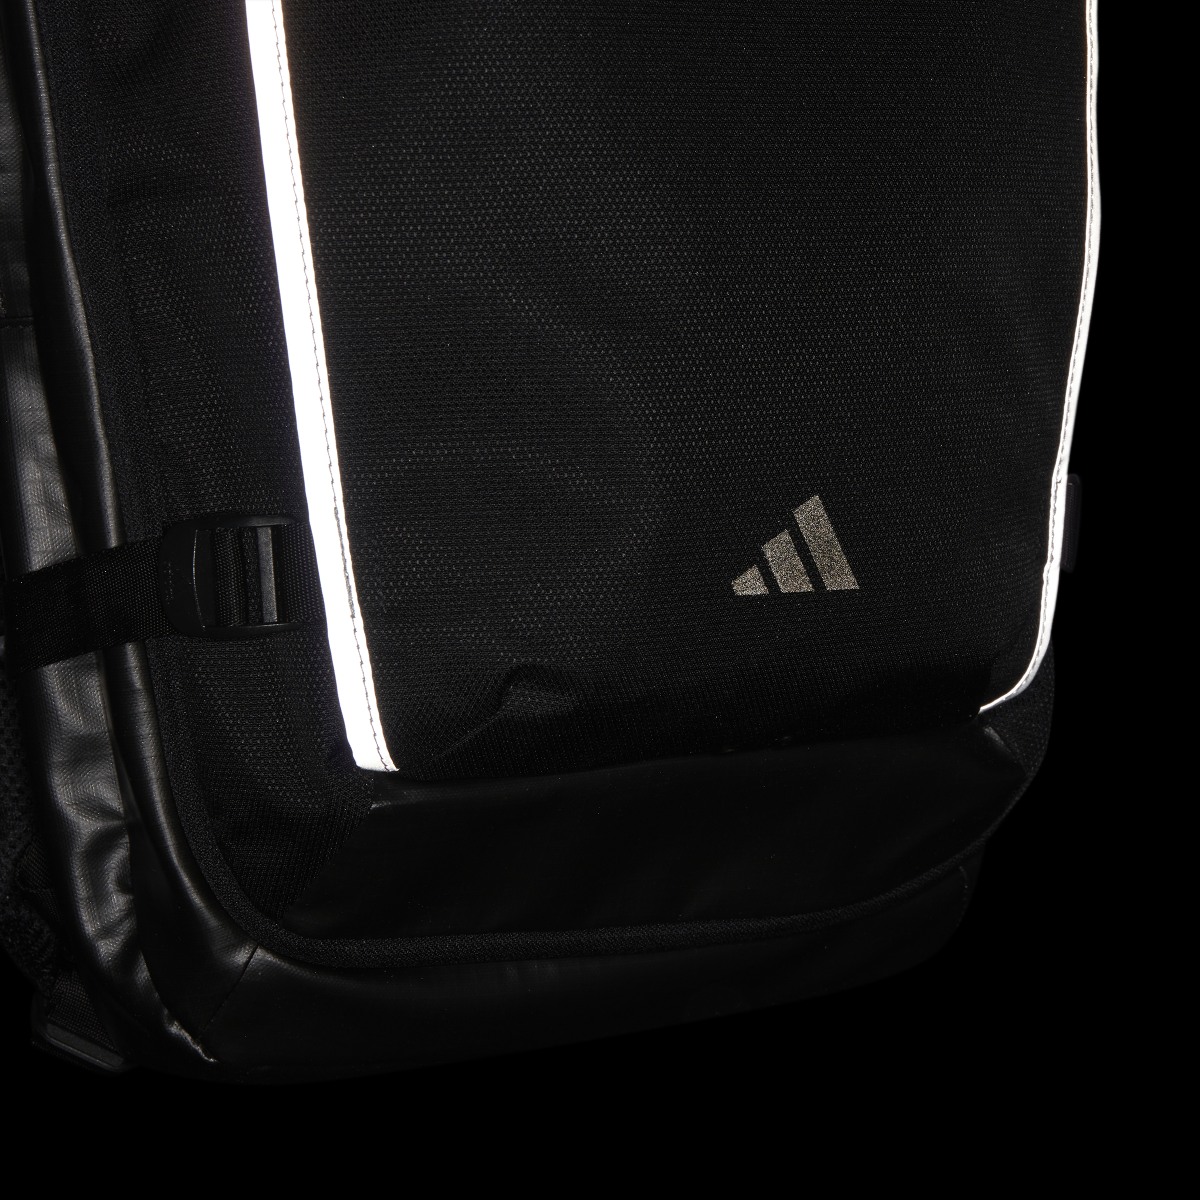 Adidas 4CMTE Backpack. 7